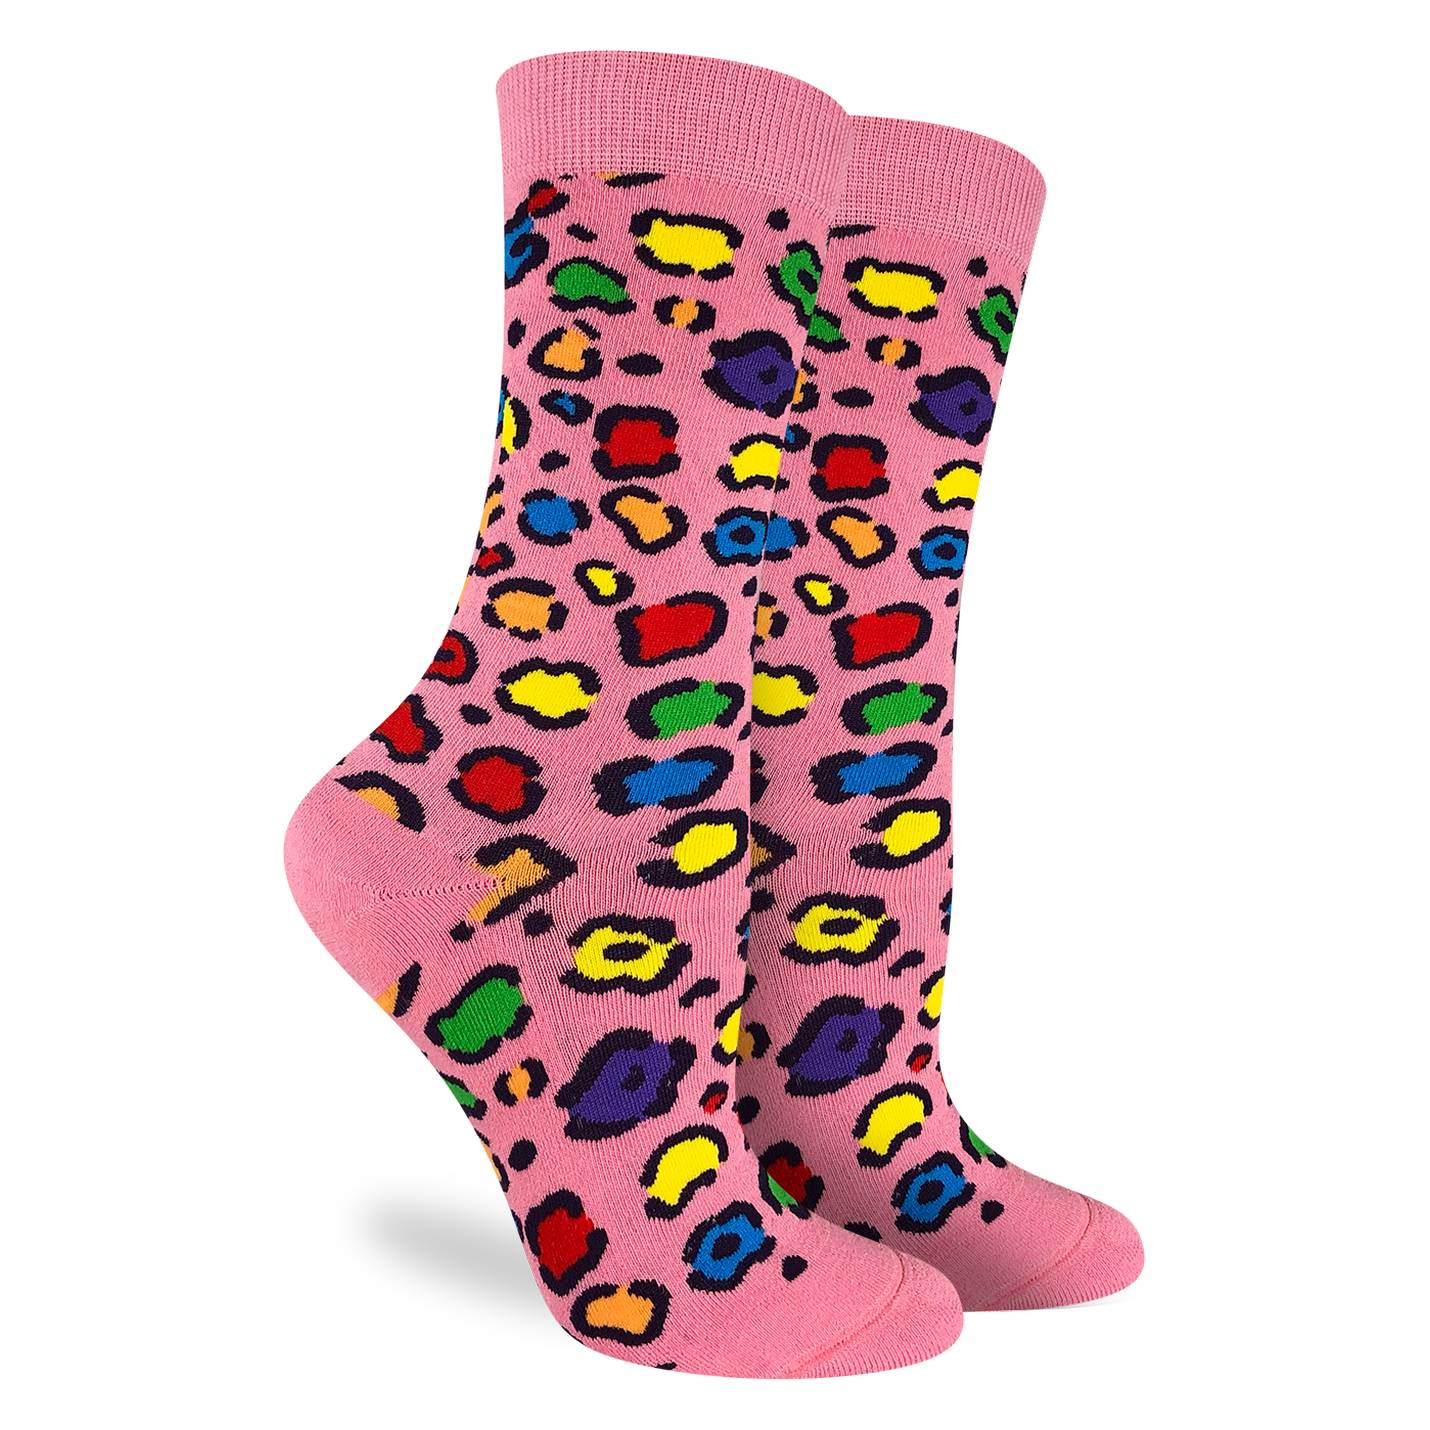 Good Luck Sock - Women's Leopard Rainbow Print Socks